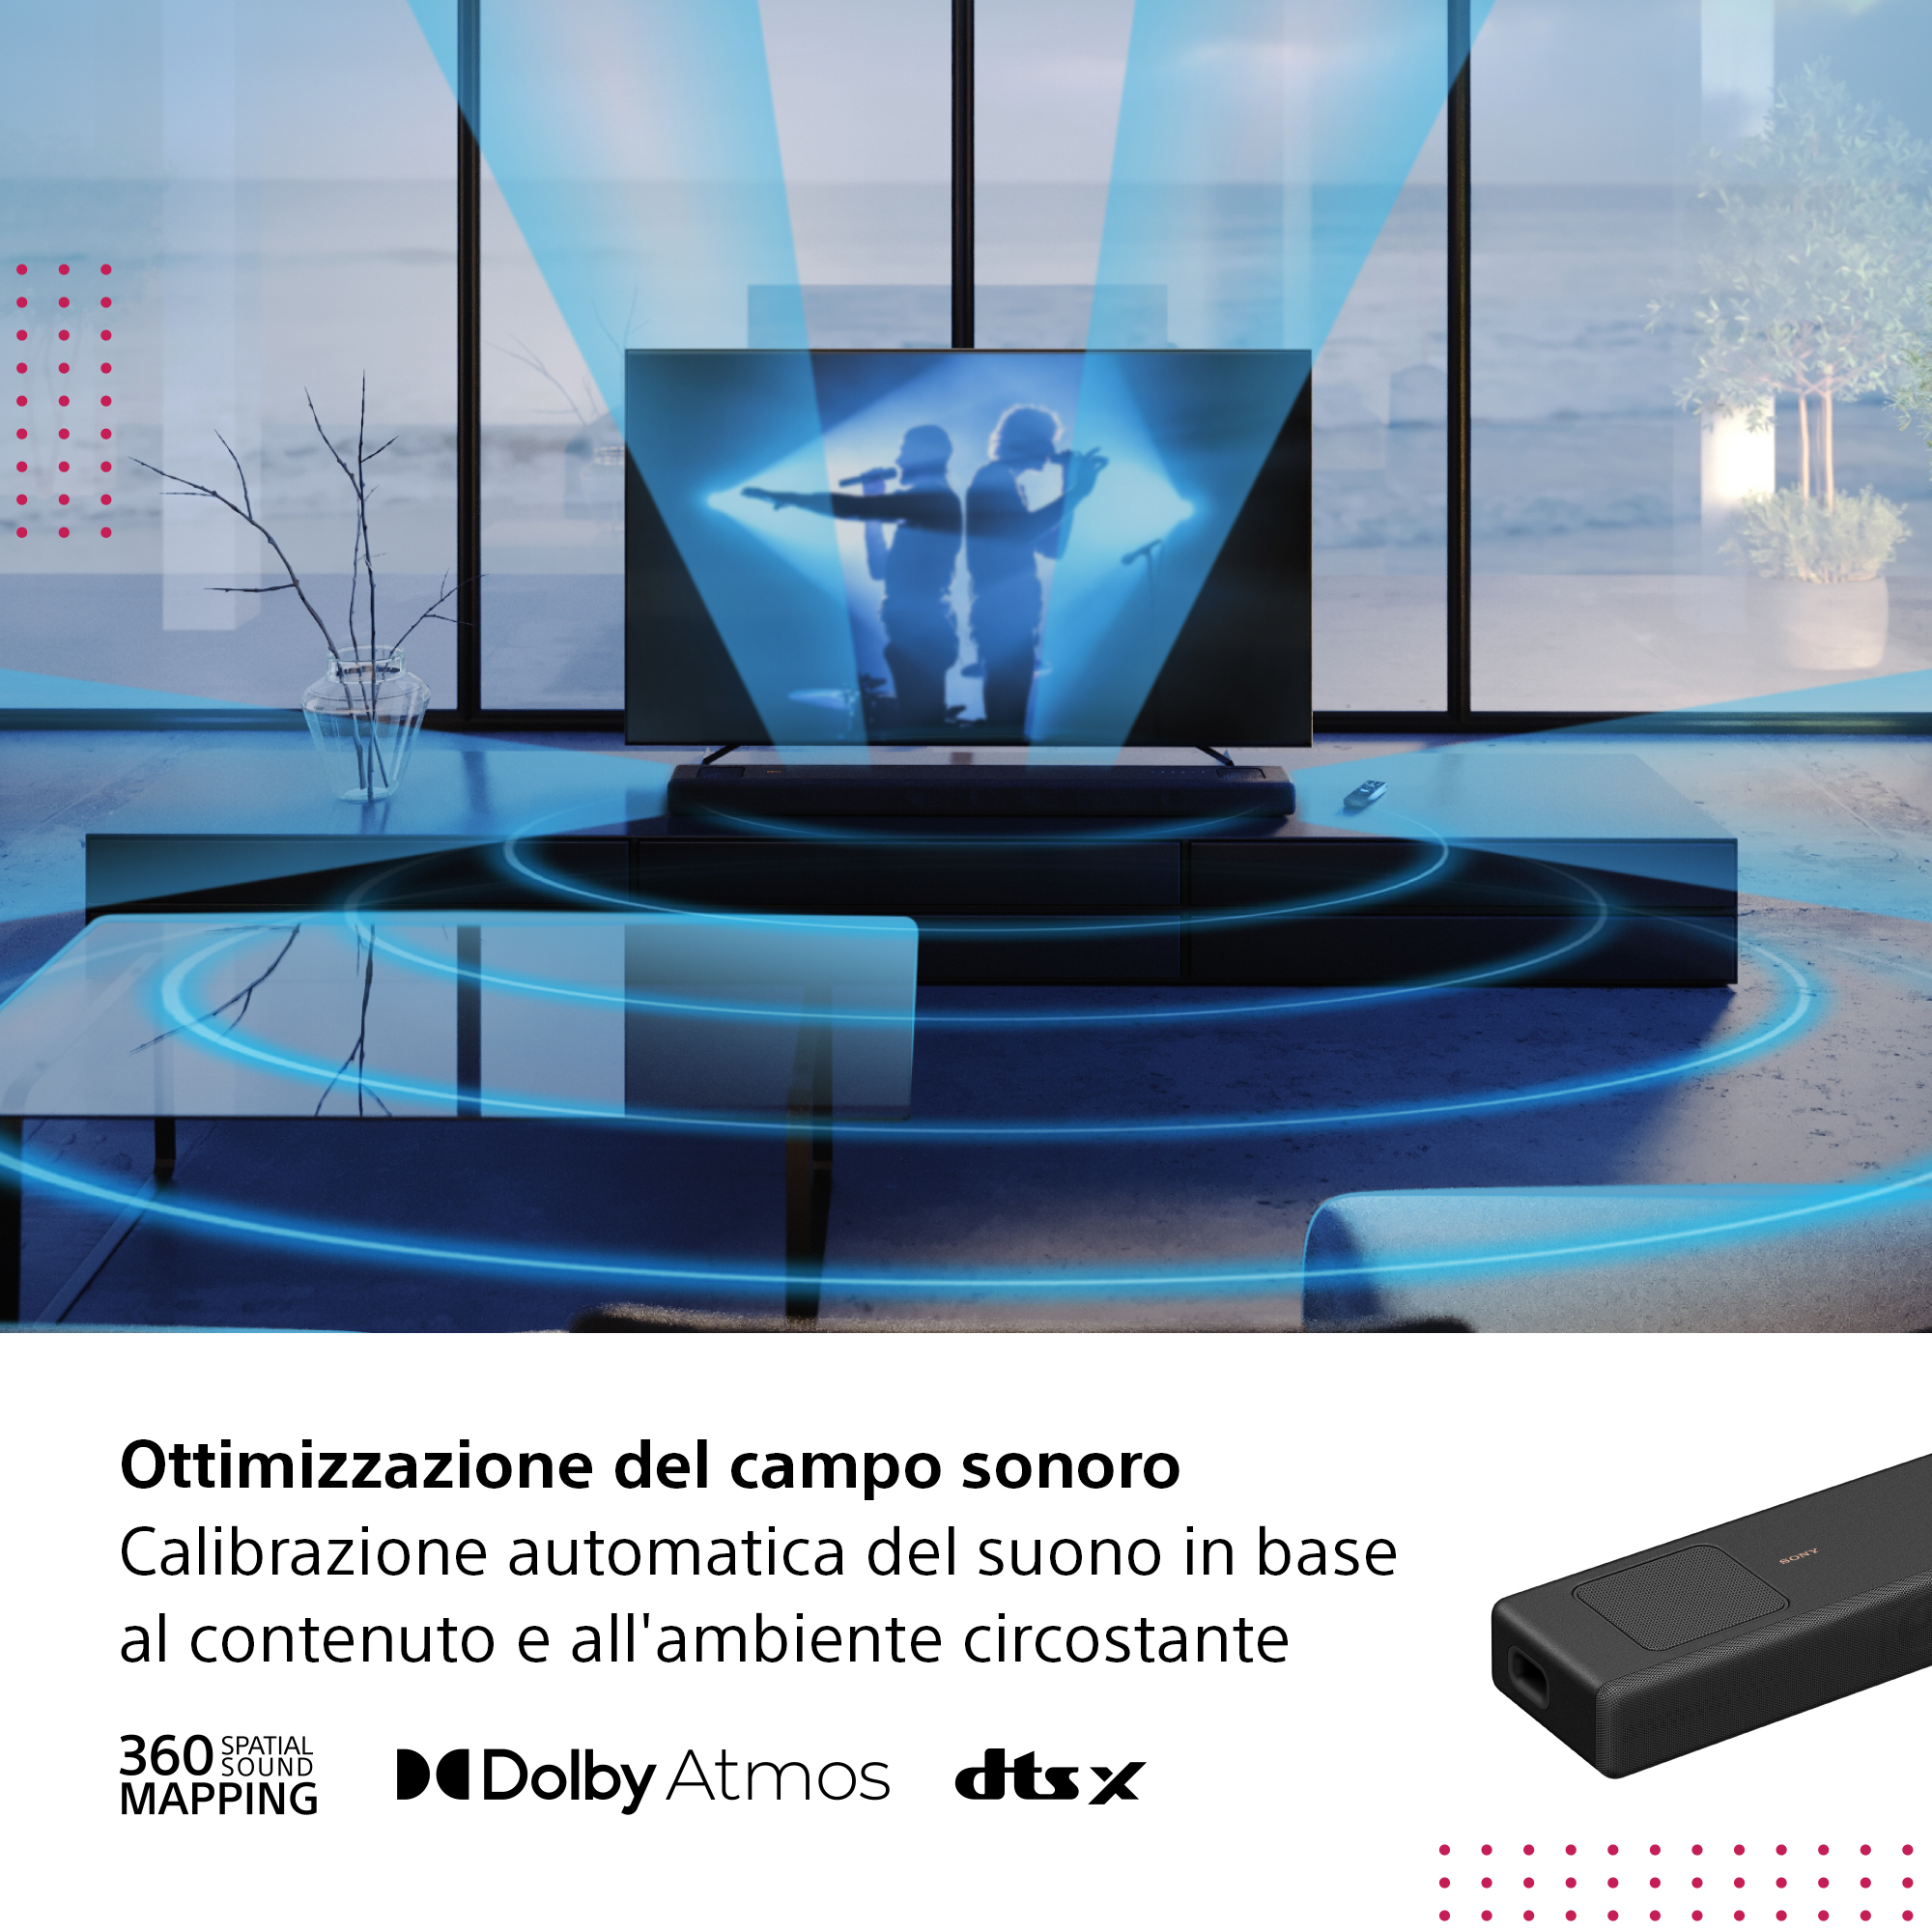 Altoparlante soundbar Sony HT-A7000 Soundbar 7.1.2 Canali con tecnologia Vertical Surround Engine, Bluetooth, Nero [HTA7000]